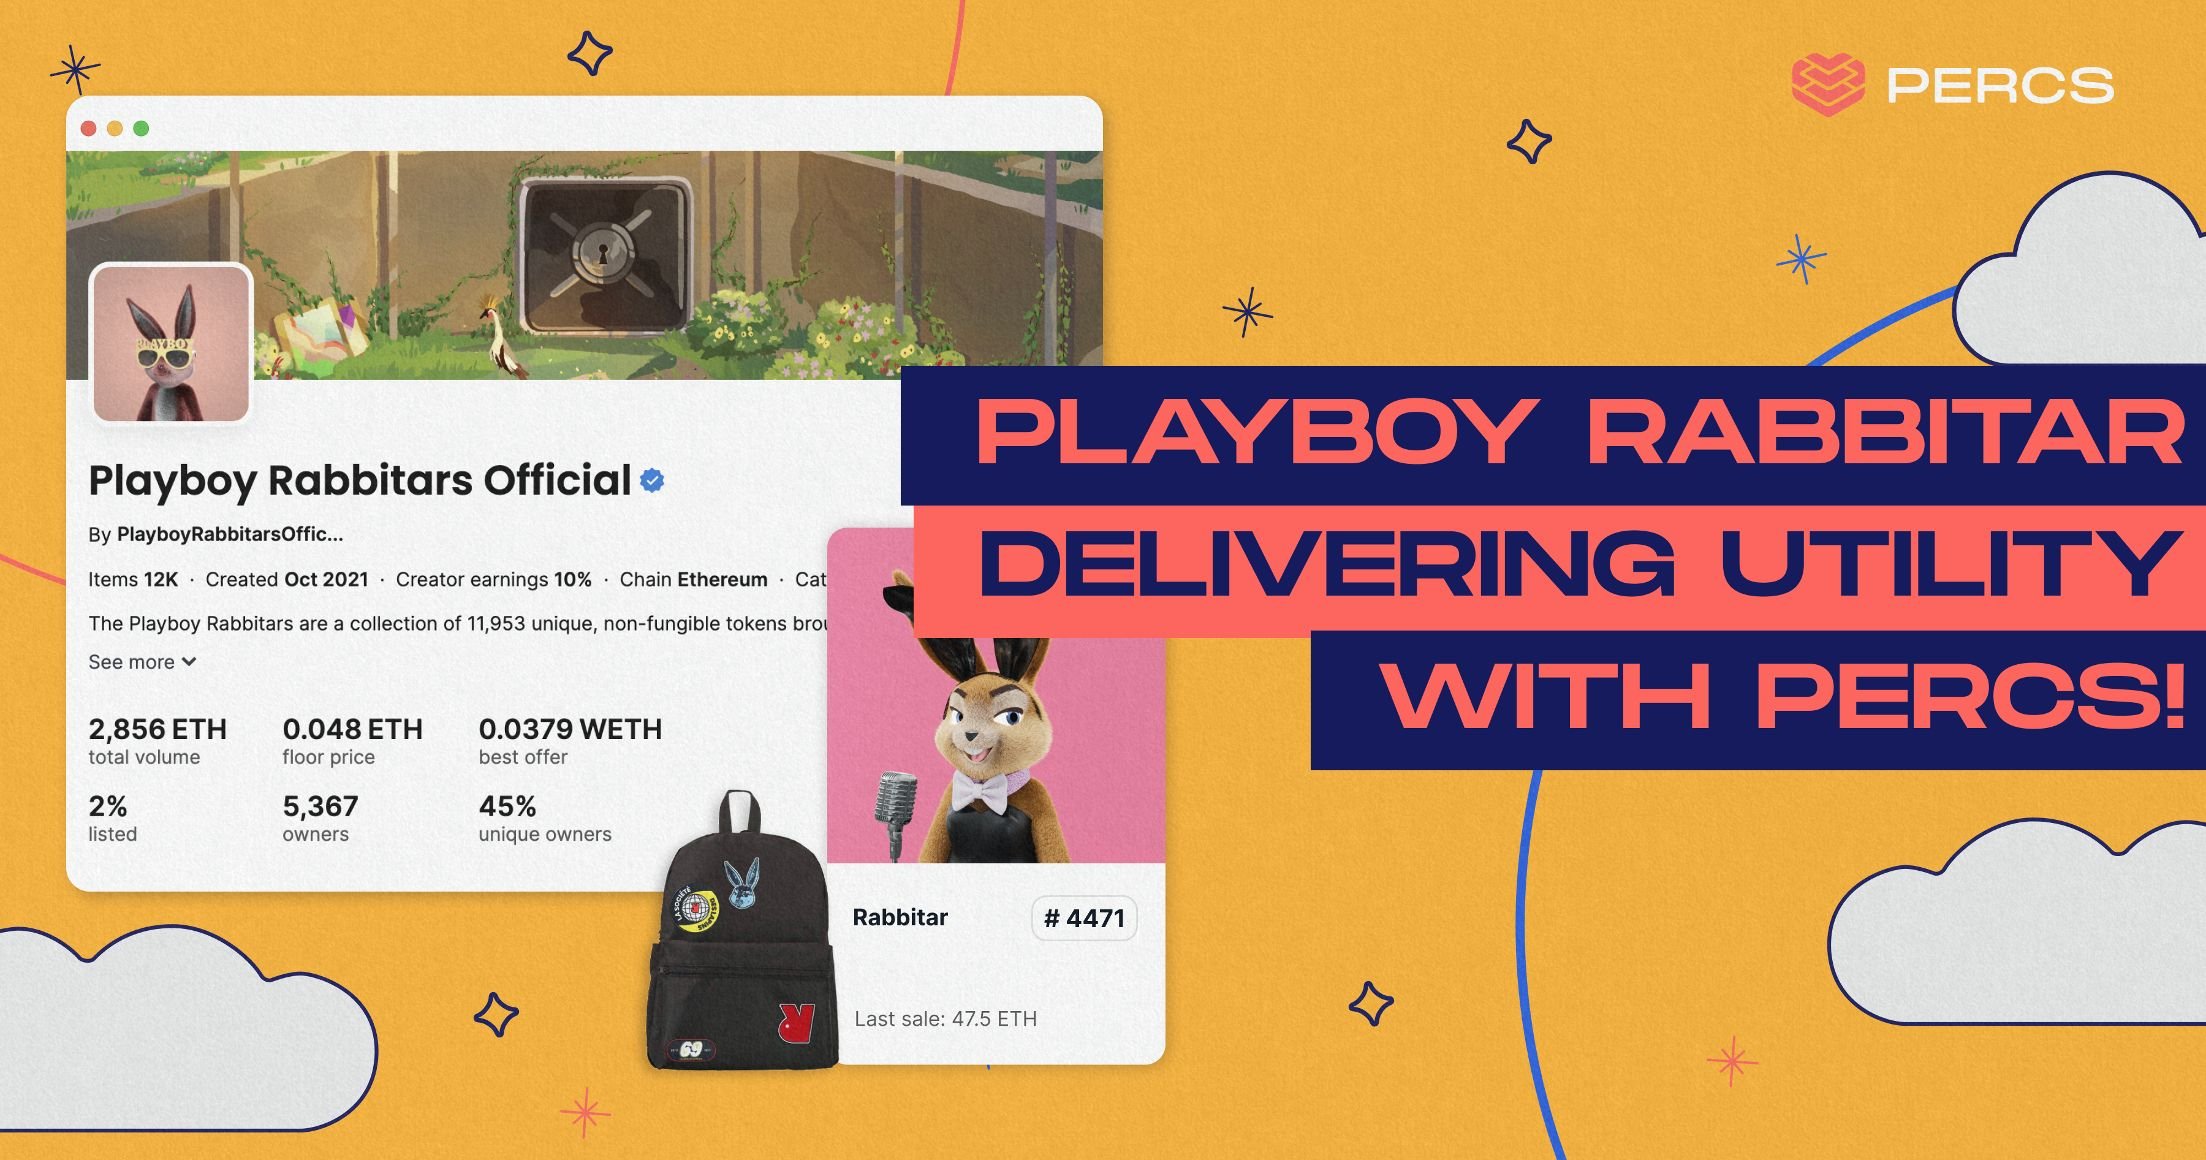 9. playboy rabbitar deliverig utility with percs pqo9s